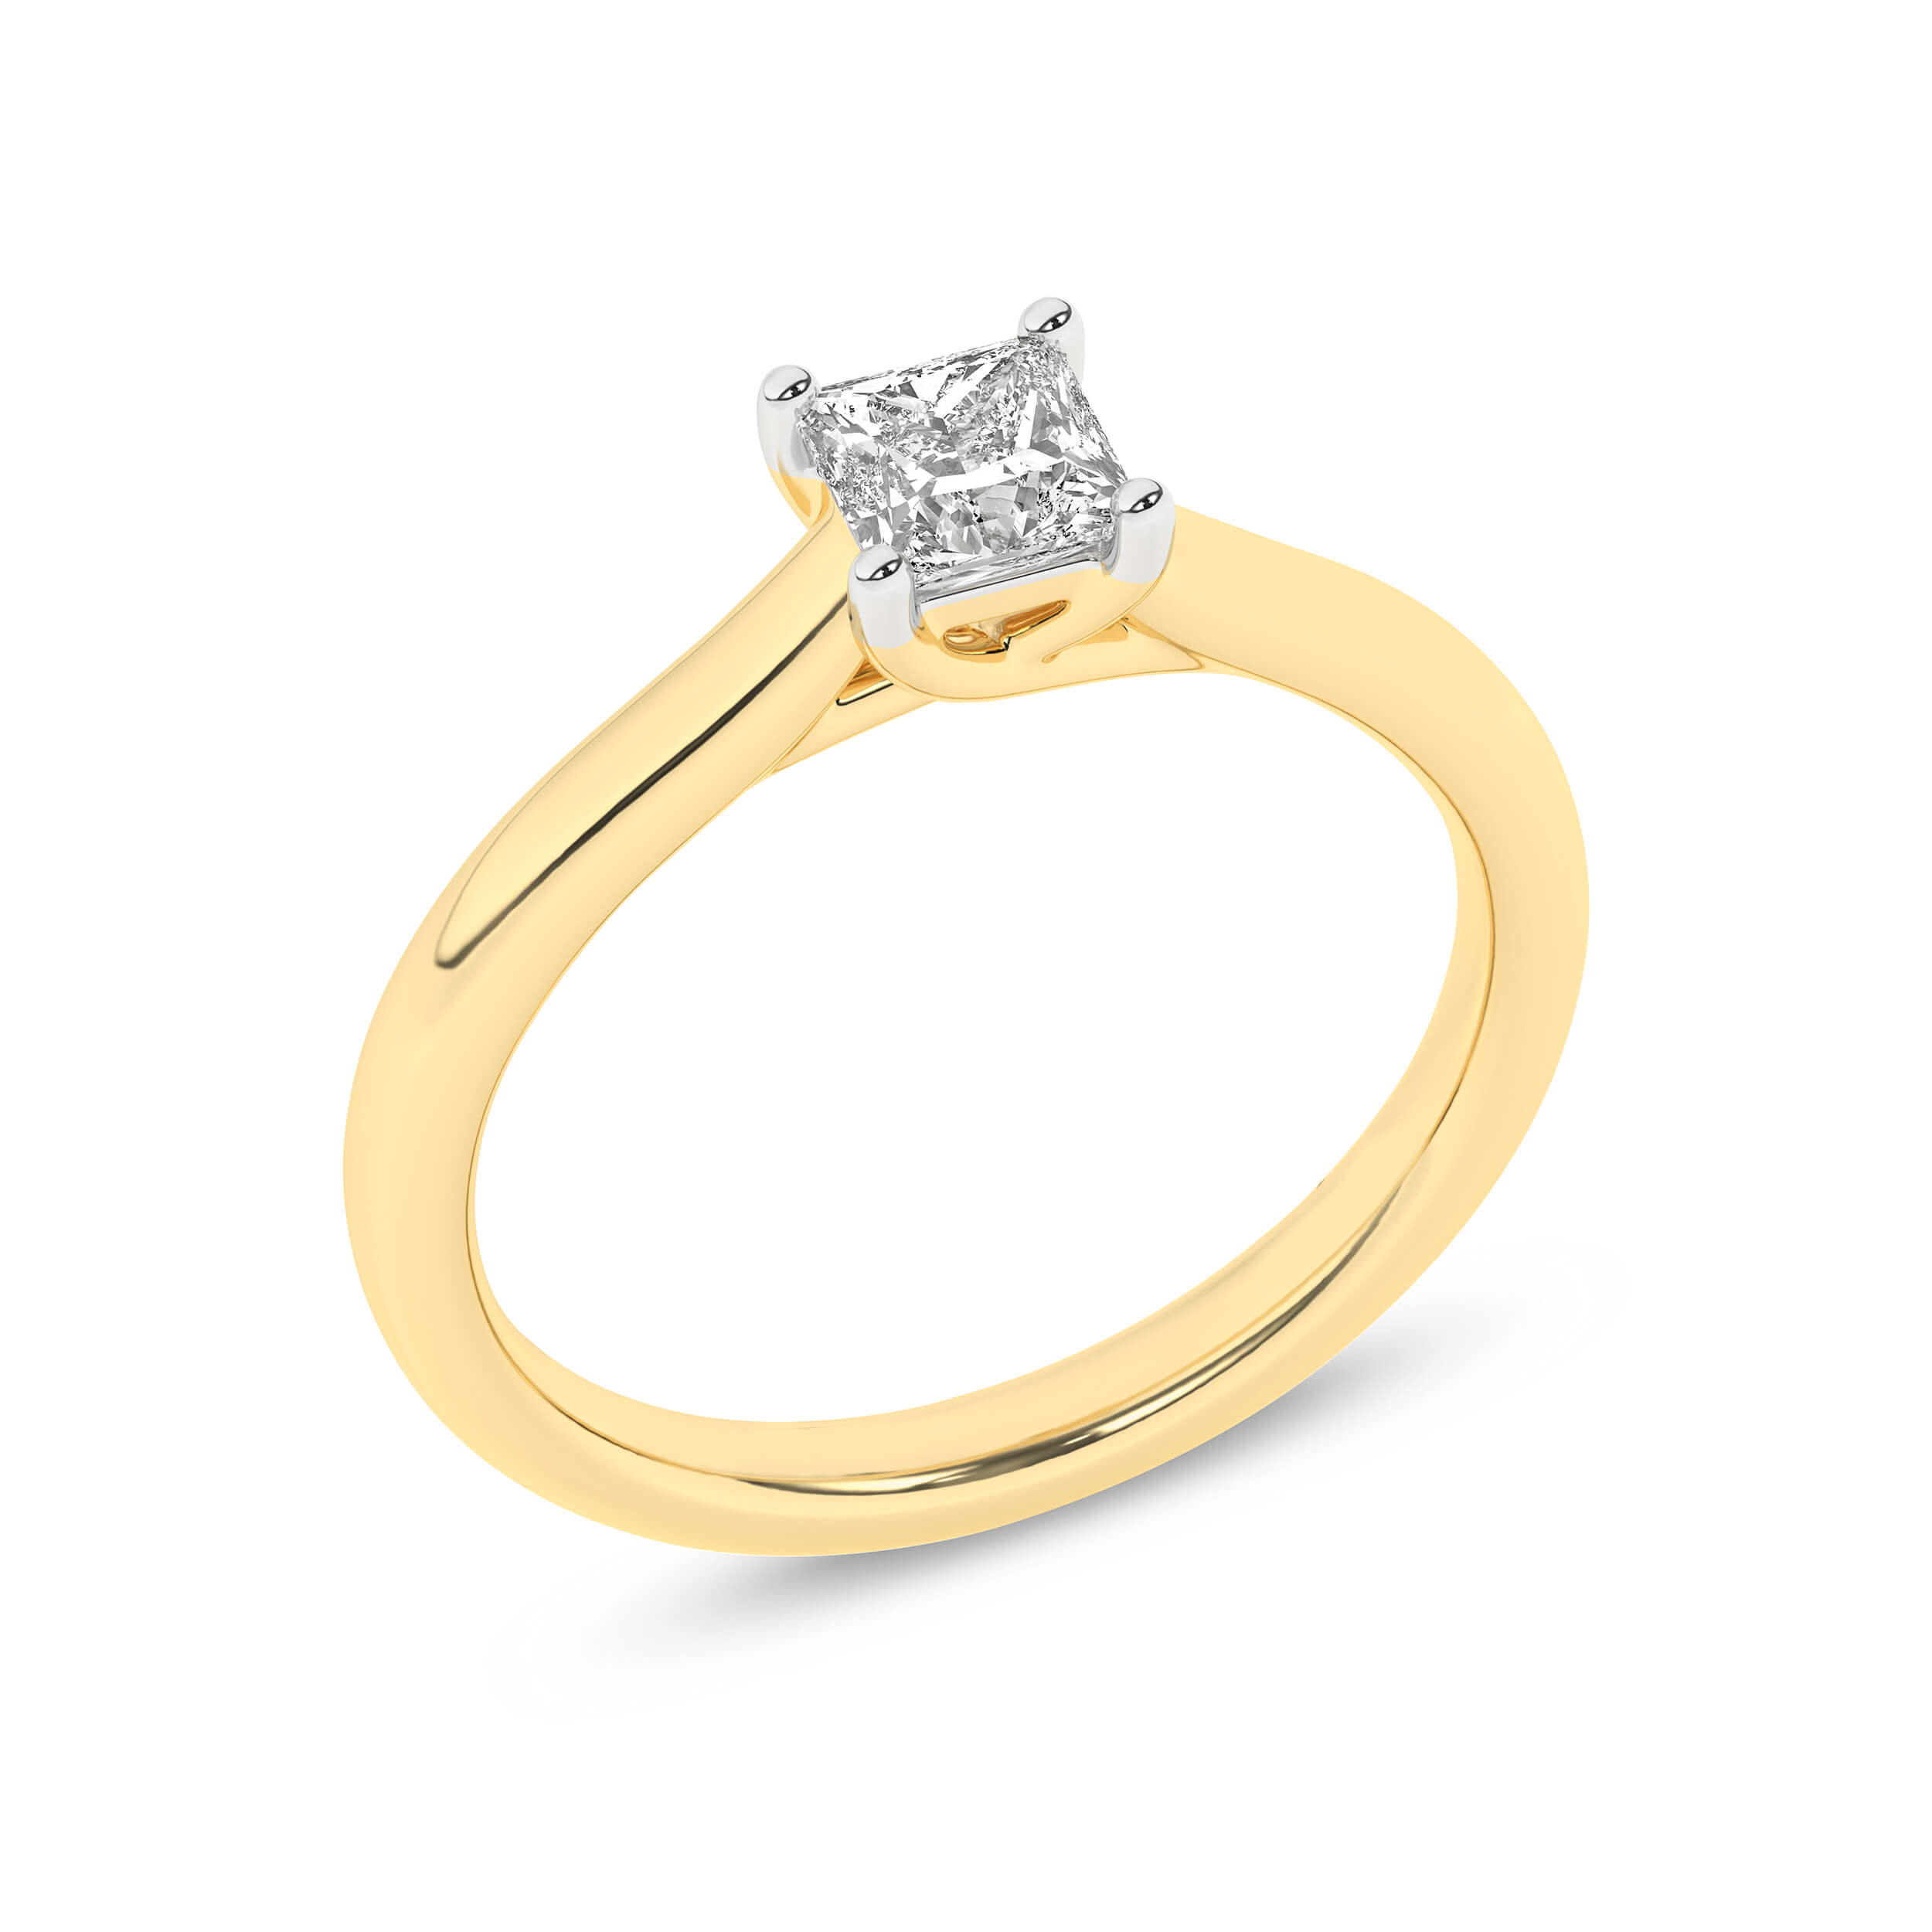 Inel de logodna din Aur Galben 14K cu Diamant 0.50Ct, articol RB18882EG, previzualizare foto 4